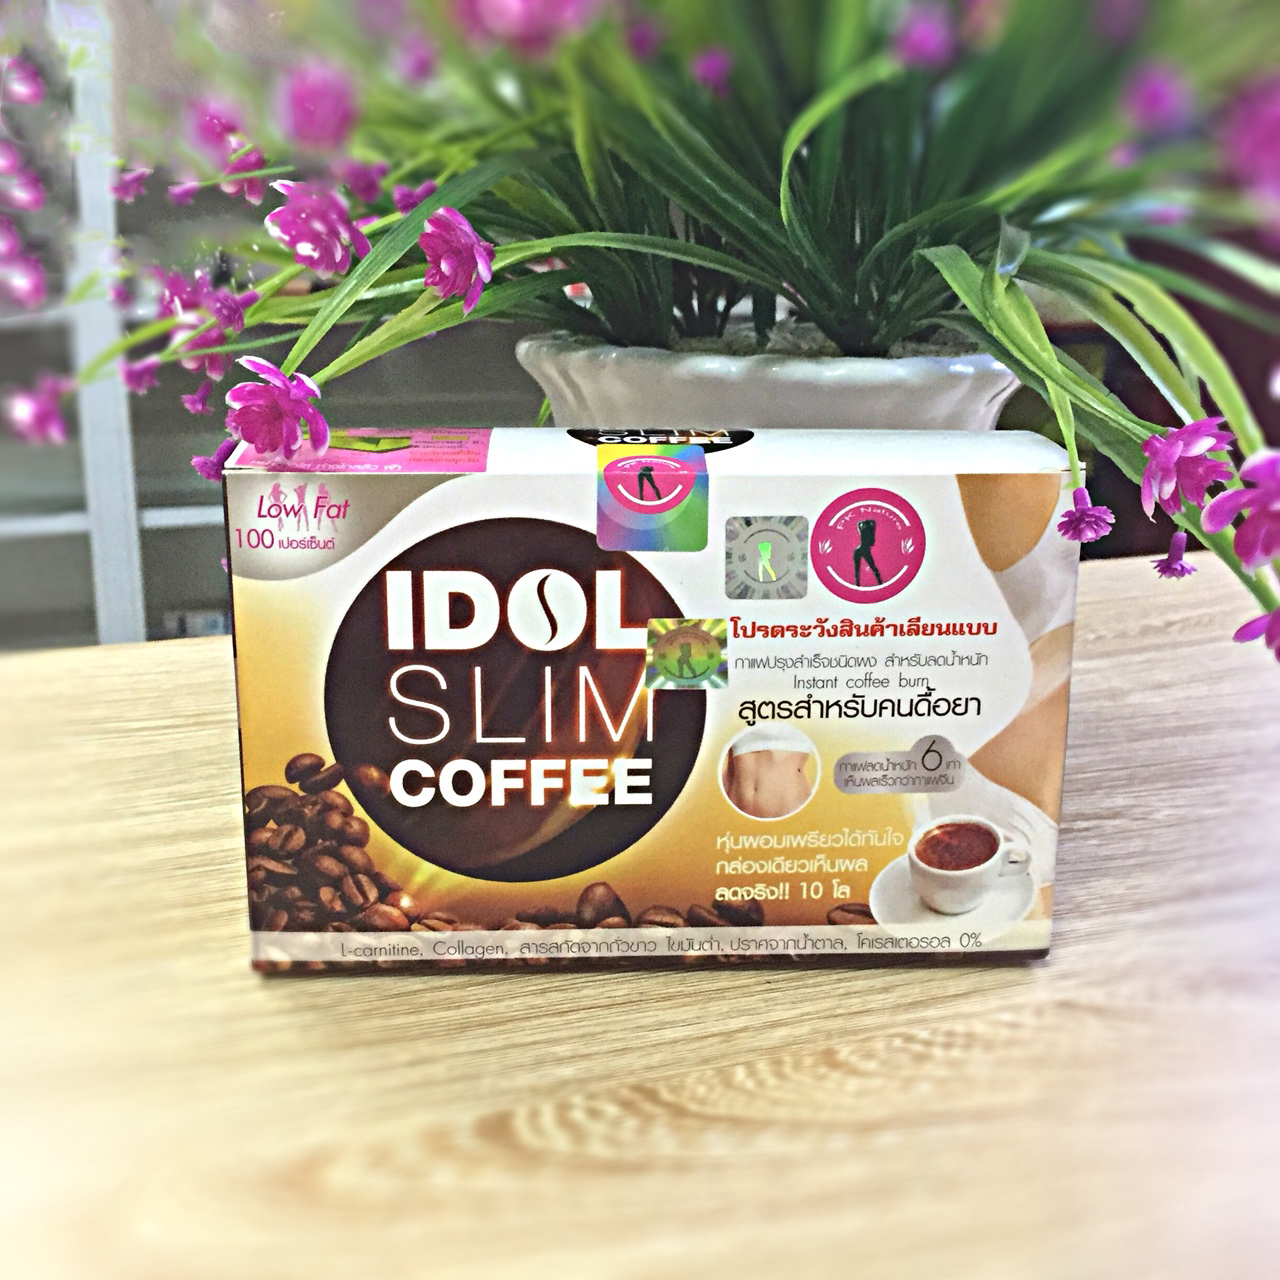 Cà Phê Giảm Cân Idol Slim Coffee X2 Thái Lan giảm cân an toàn hiệu quả